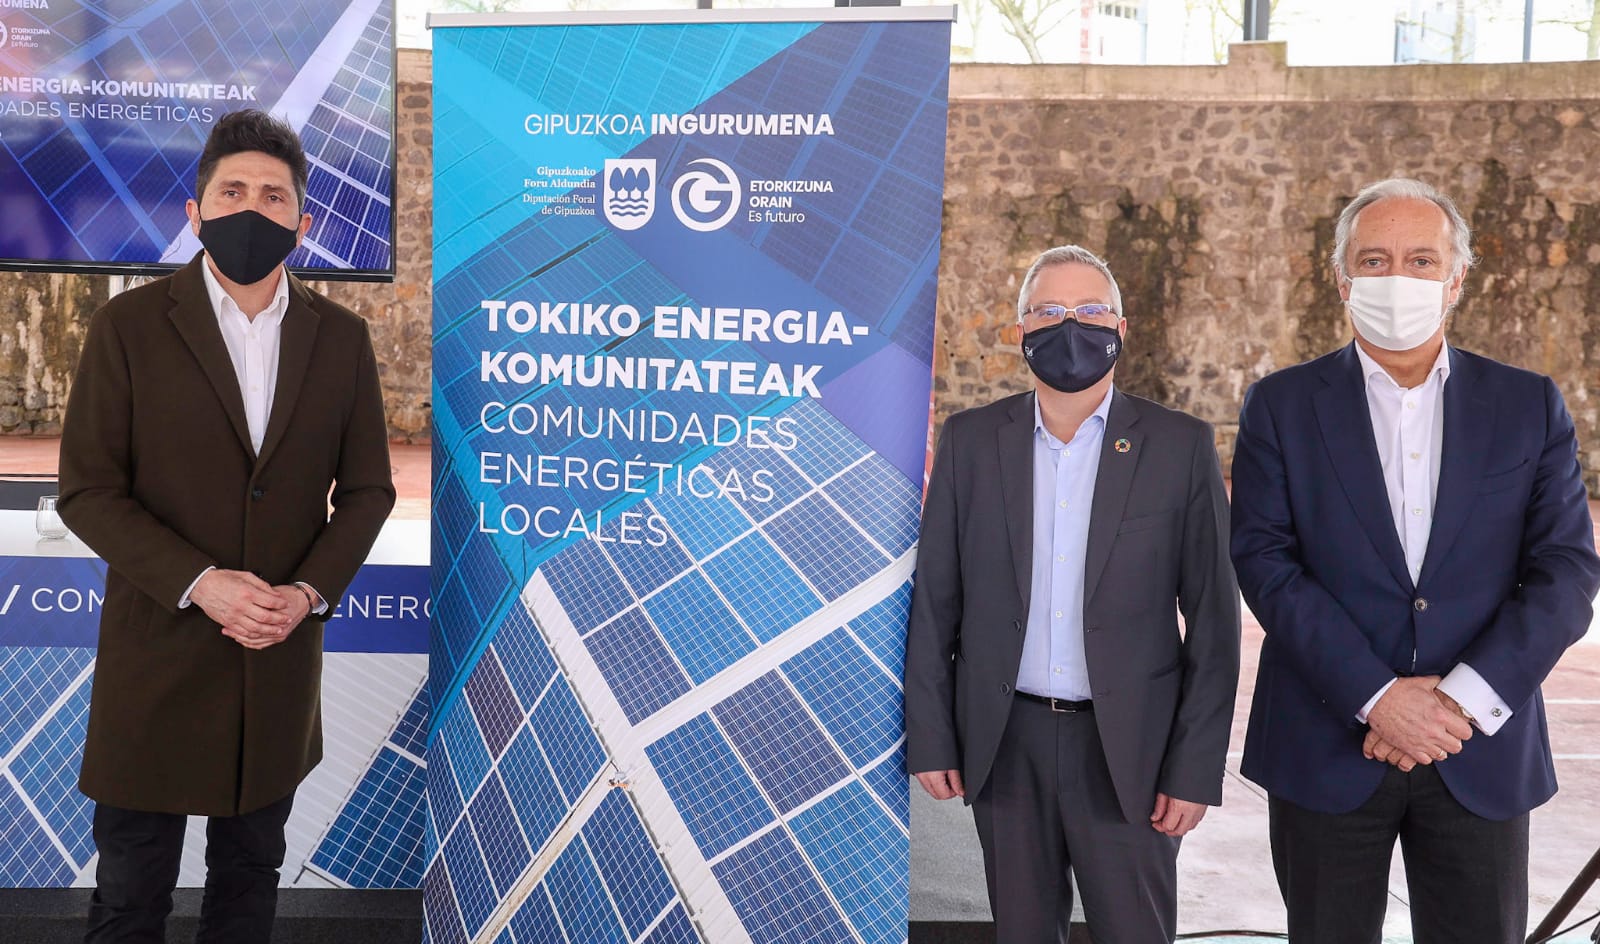 200 hogares de Zumarraga podrán optar al autoconsumo energético a través de la primera Comunidad energética local...